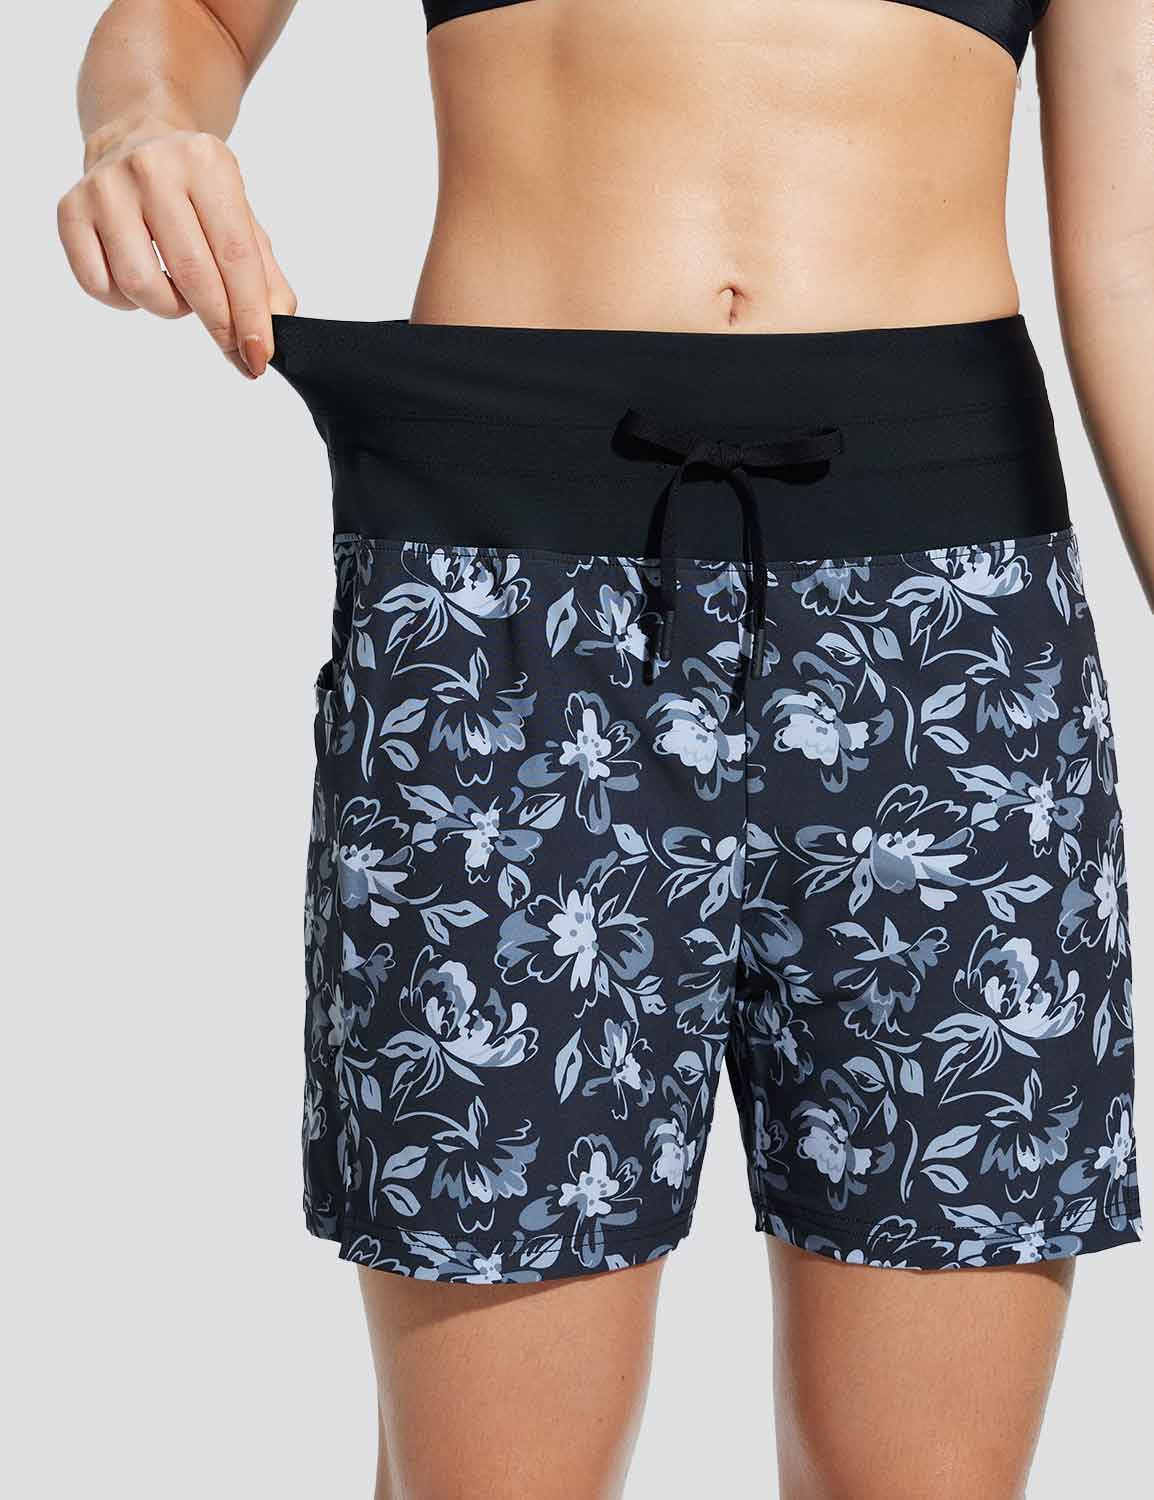 Baleaf Women's Wide Waistband Printed Quick-dry Swim Shorts Black Flowers Details